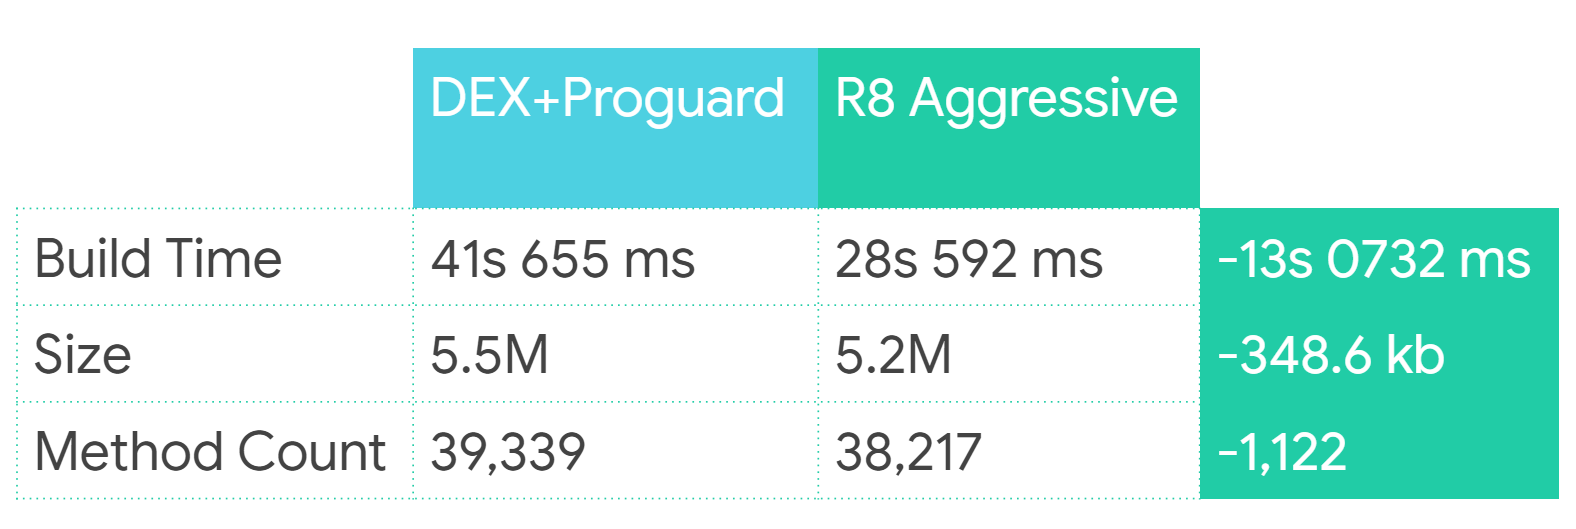 Dex-Proguard vs R8